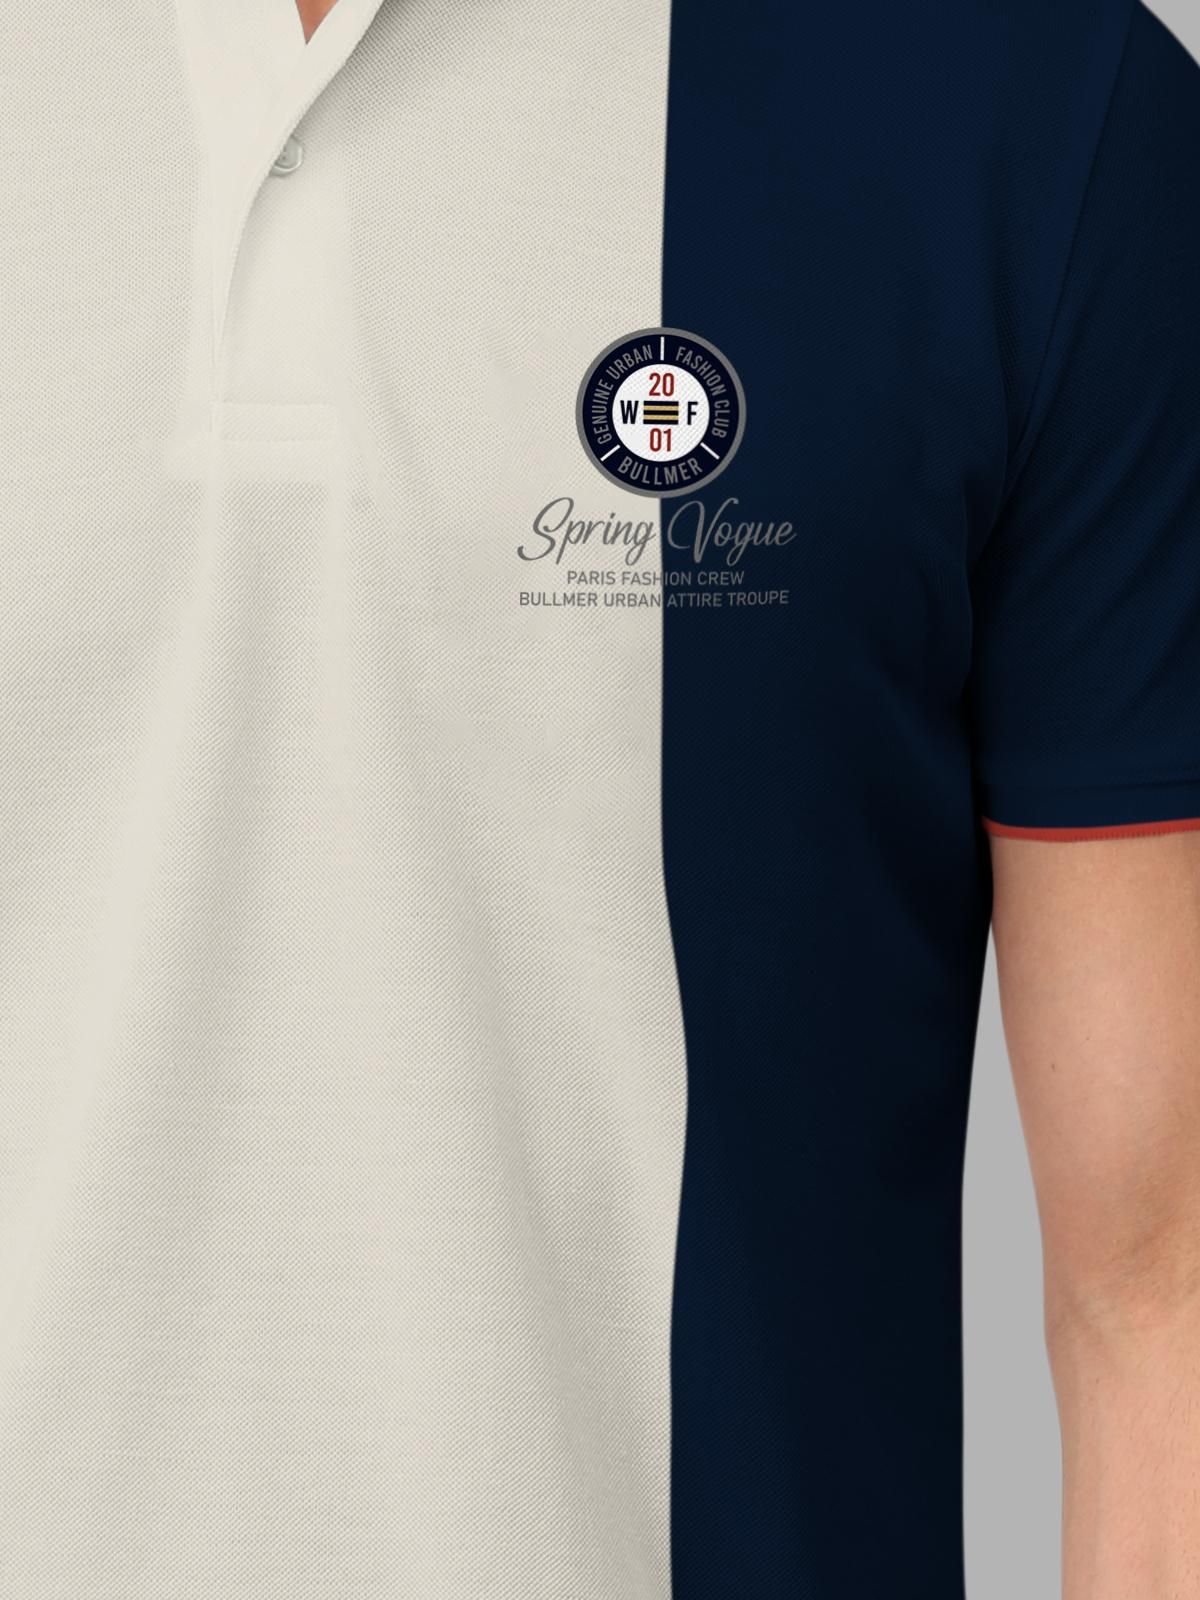 ColorblockHalf Sleeve Polo Collar T-Shirt for Men's